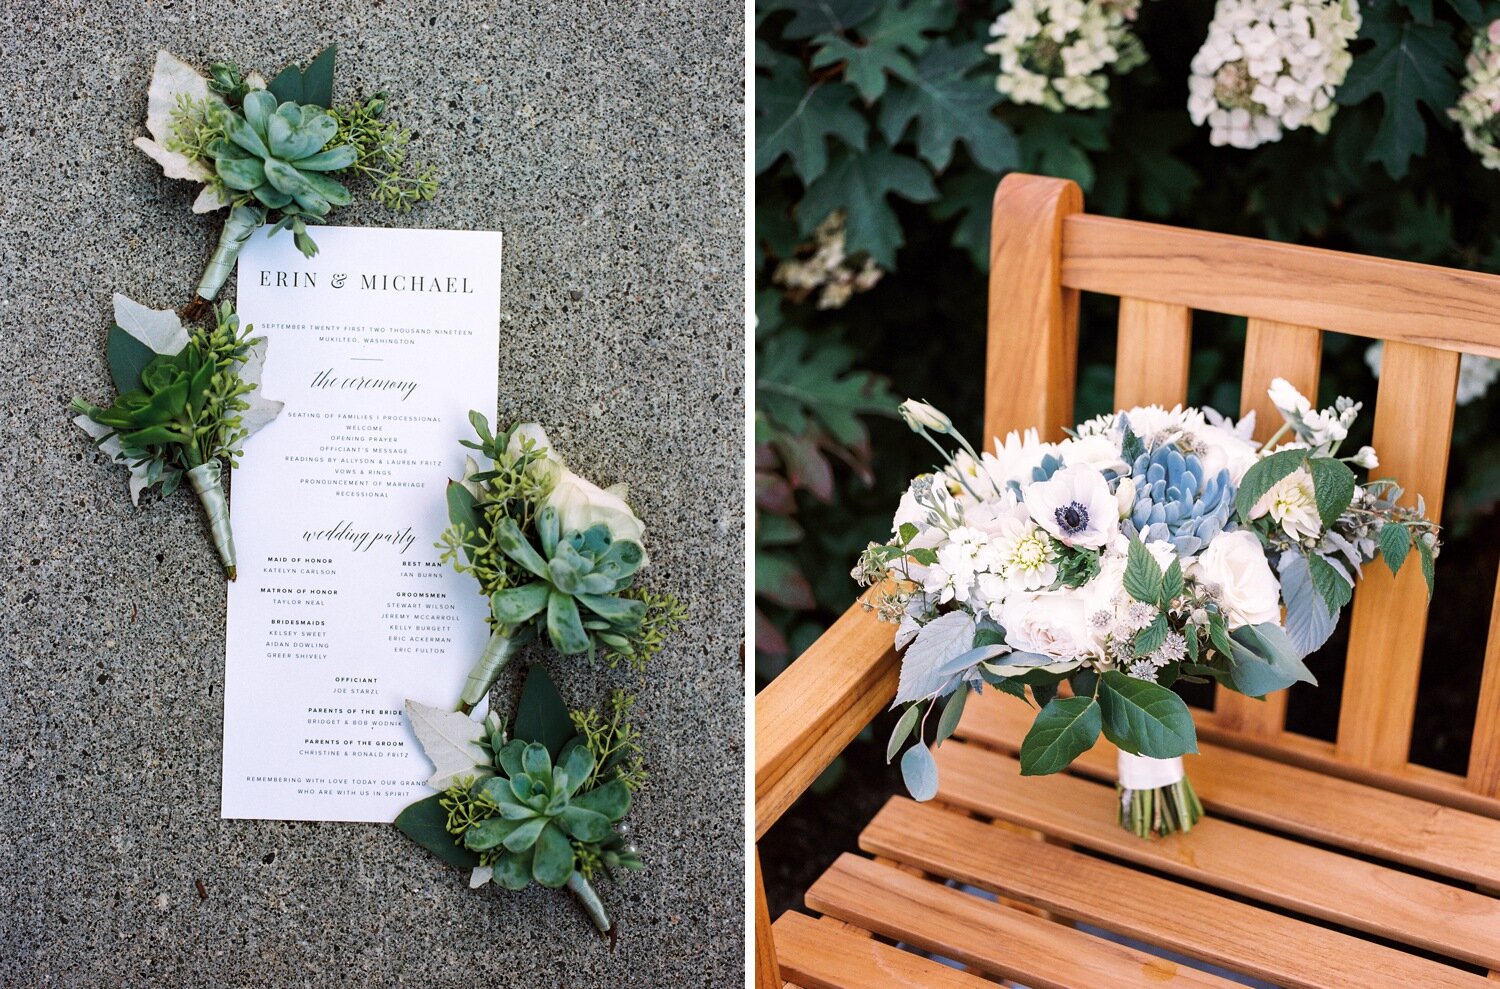 rosehill community center wedding flowers photography.jpg